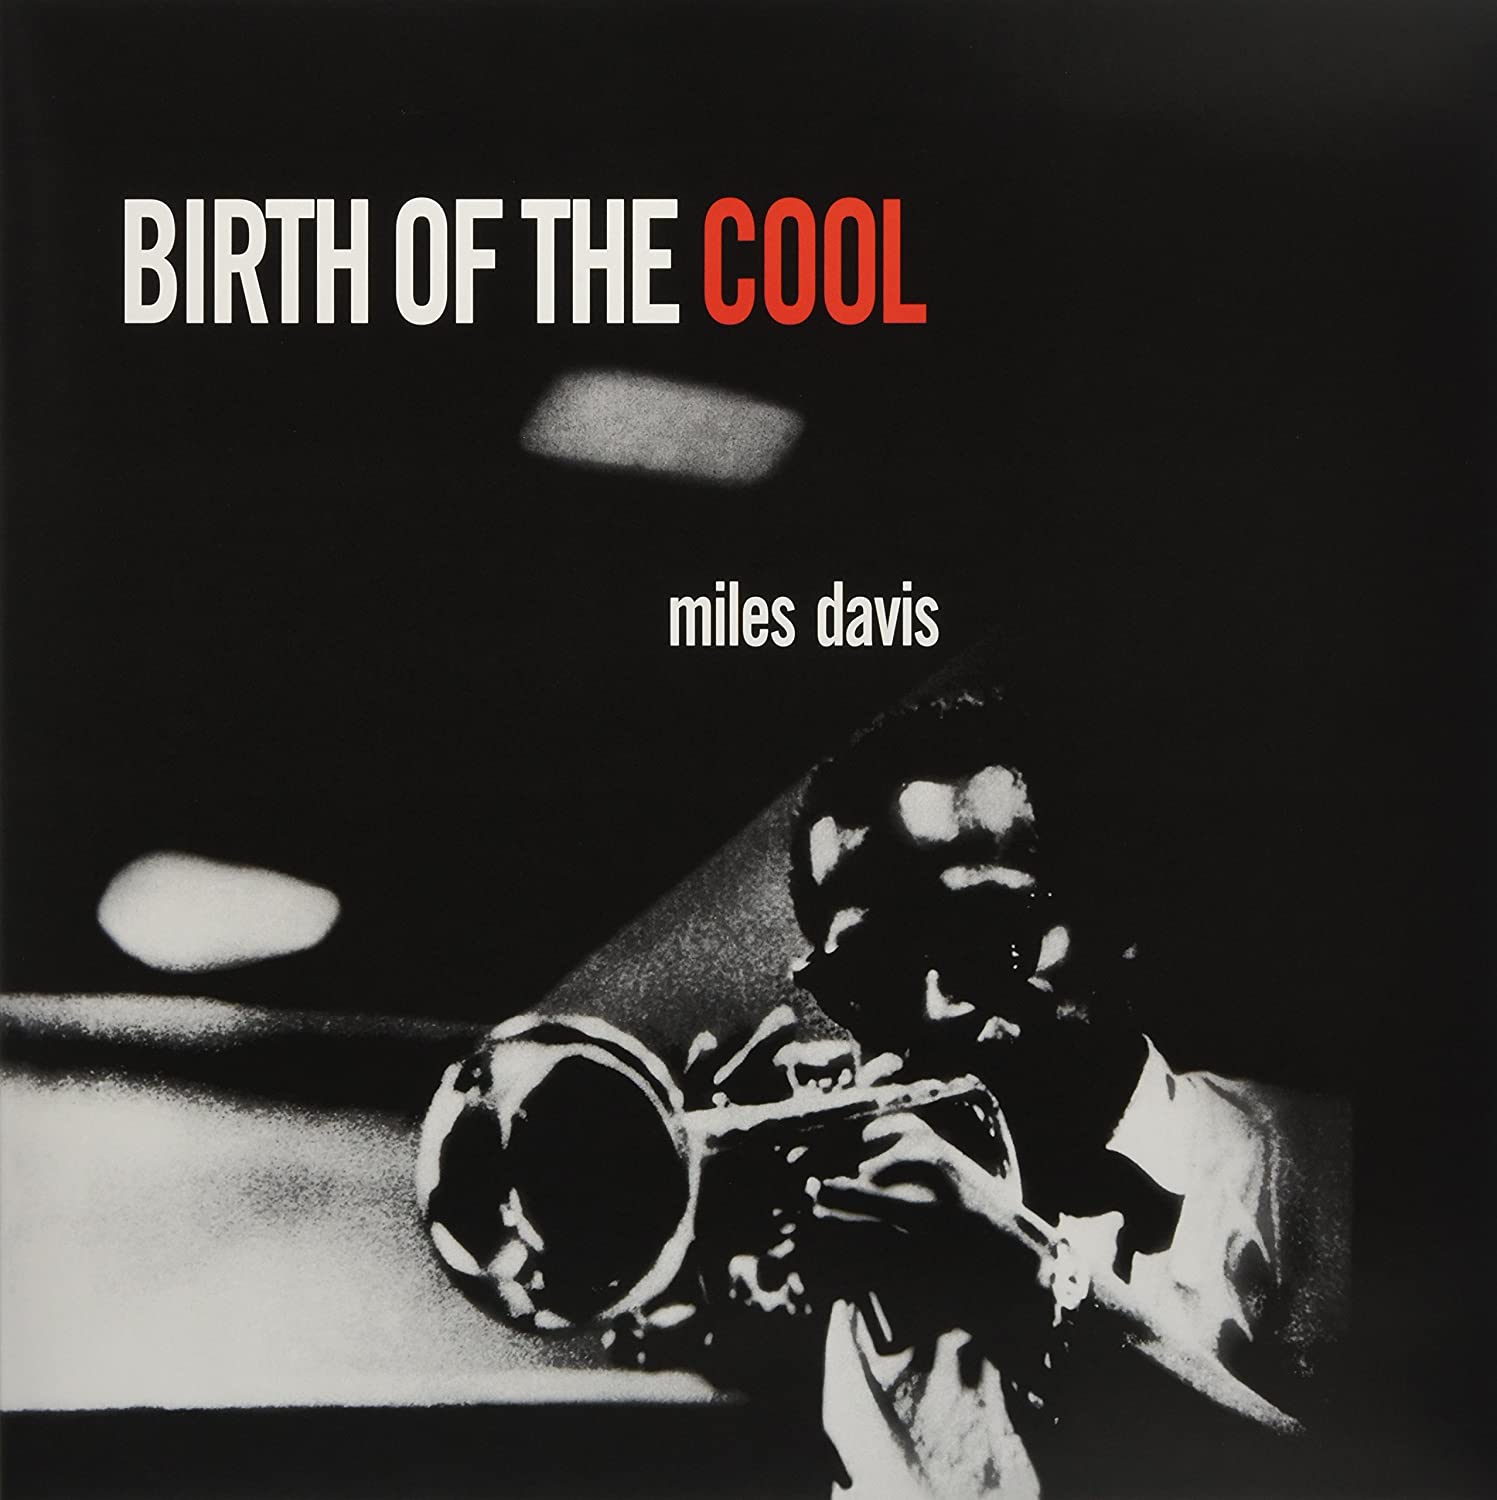 Miles Davis - The Birth of the Cool LP (180g, Red Vinyl)